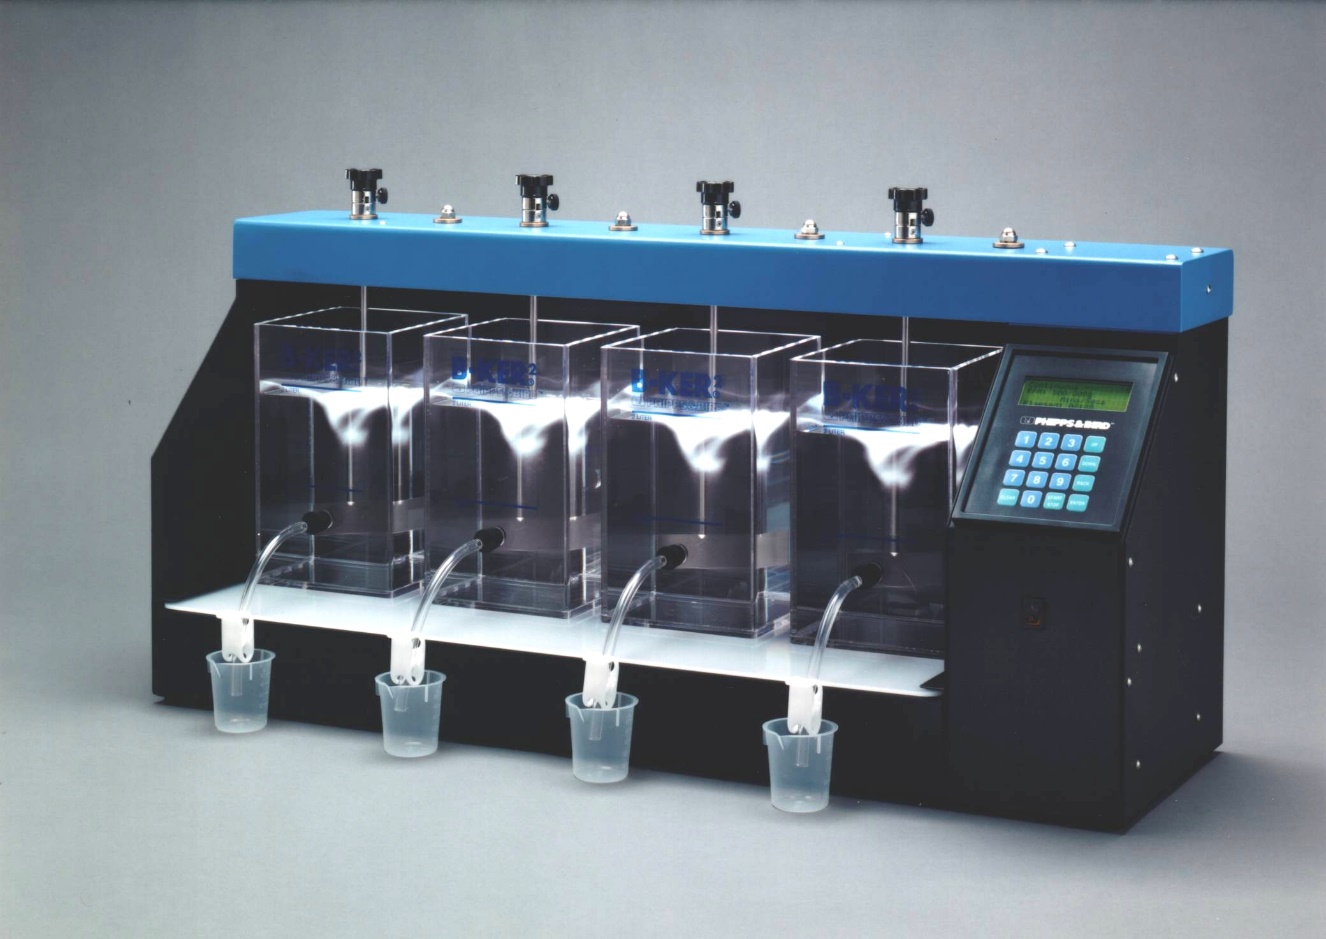 Termohigrómetro Análogo – Tipo industrial caja metálica – Labexco